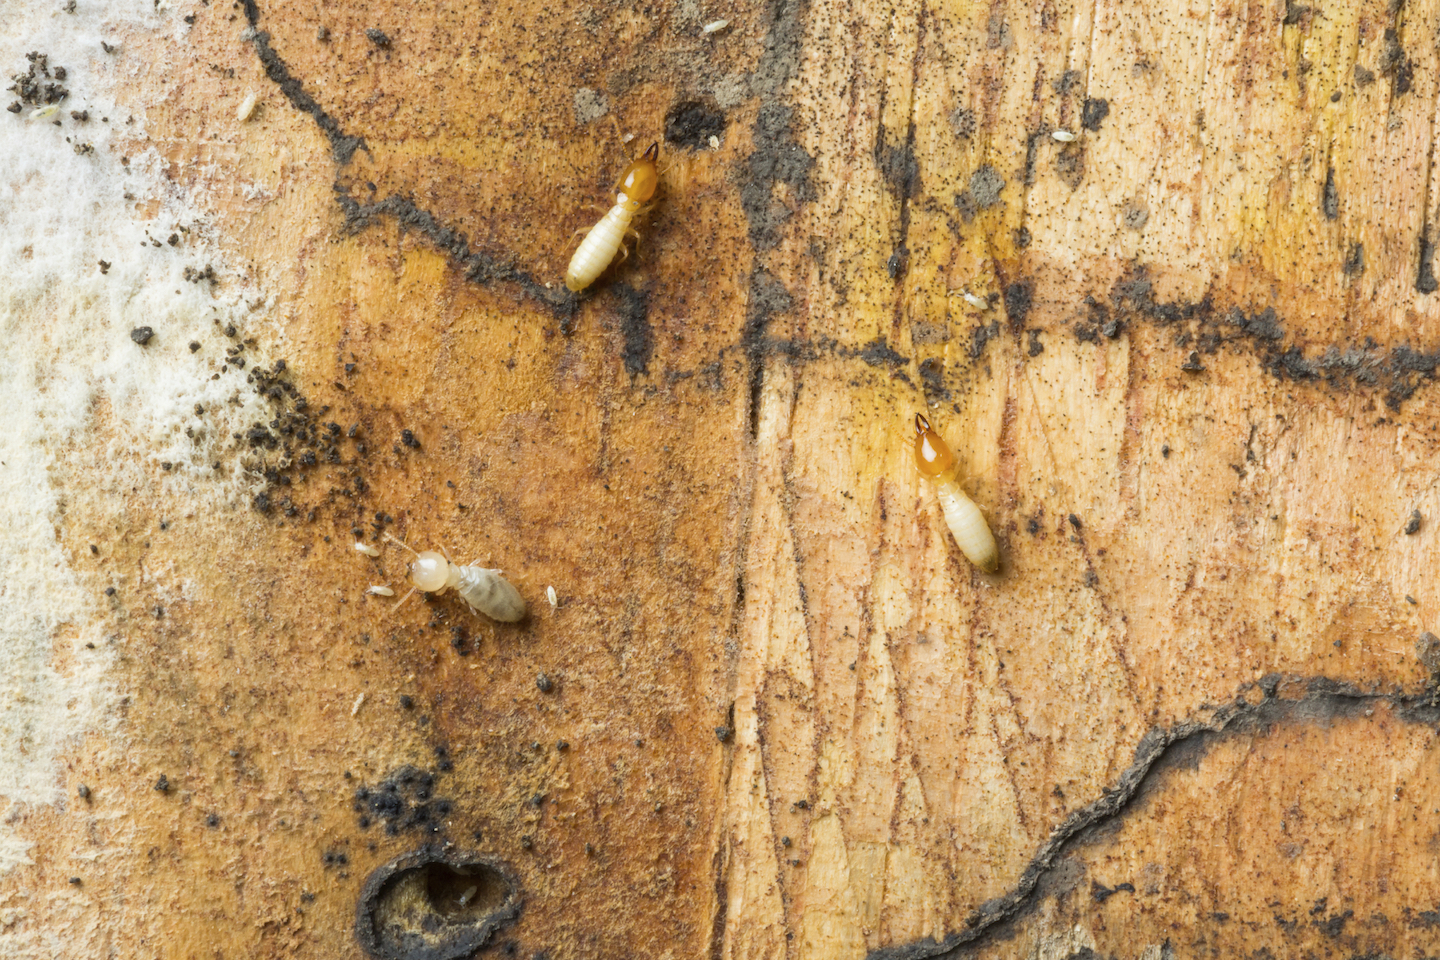 Termites Crawling on Wall